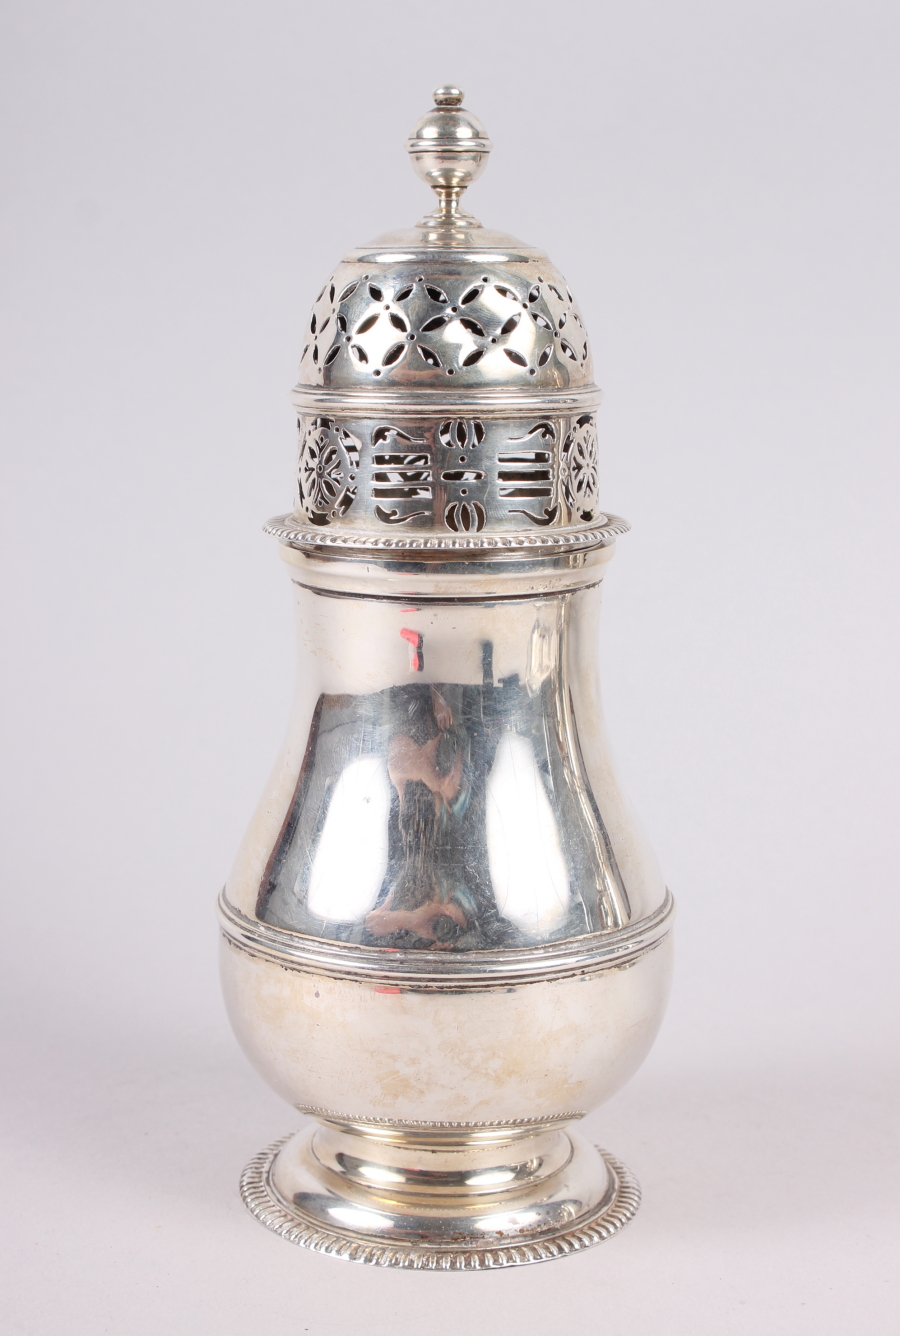 A Georgian design silver baluster sugar sifter, London 1907, 9.5oz troy approx